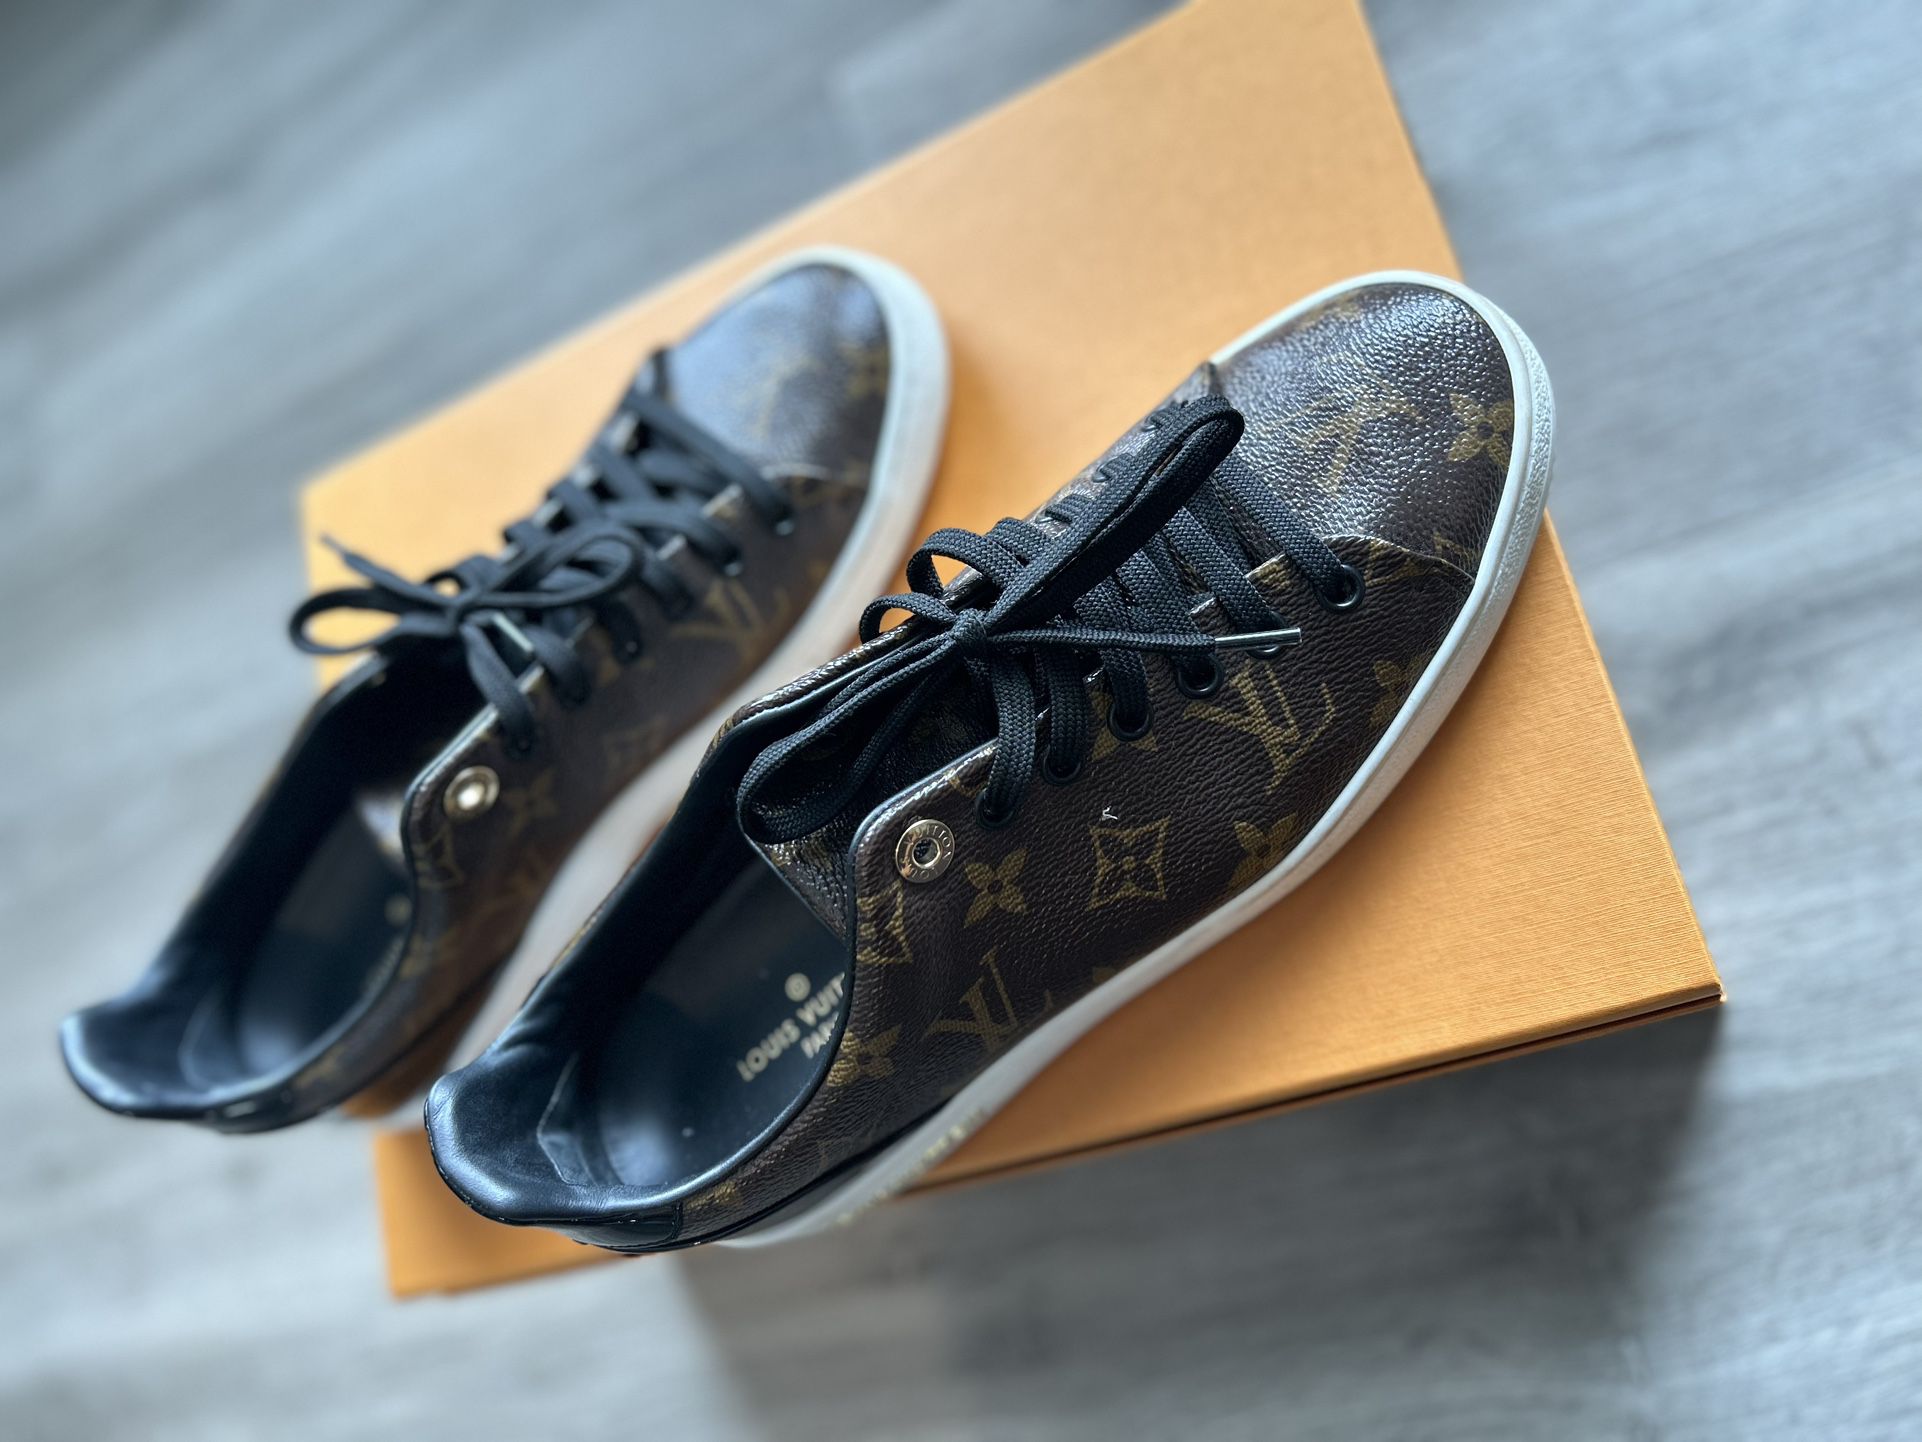 Louis Vuitton, Shoes, Louis Vuitton Frontrow Sneaker Cacao Size 4